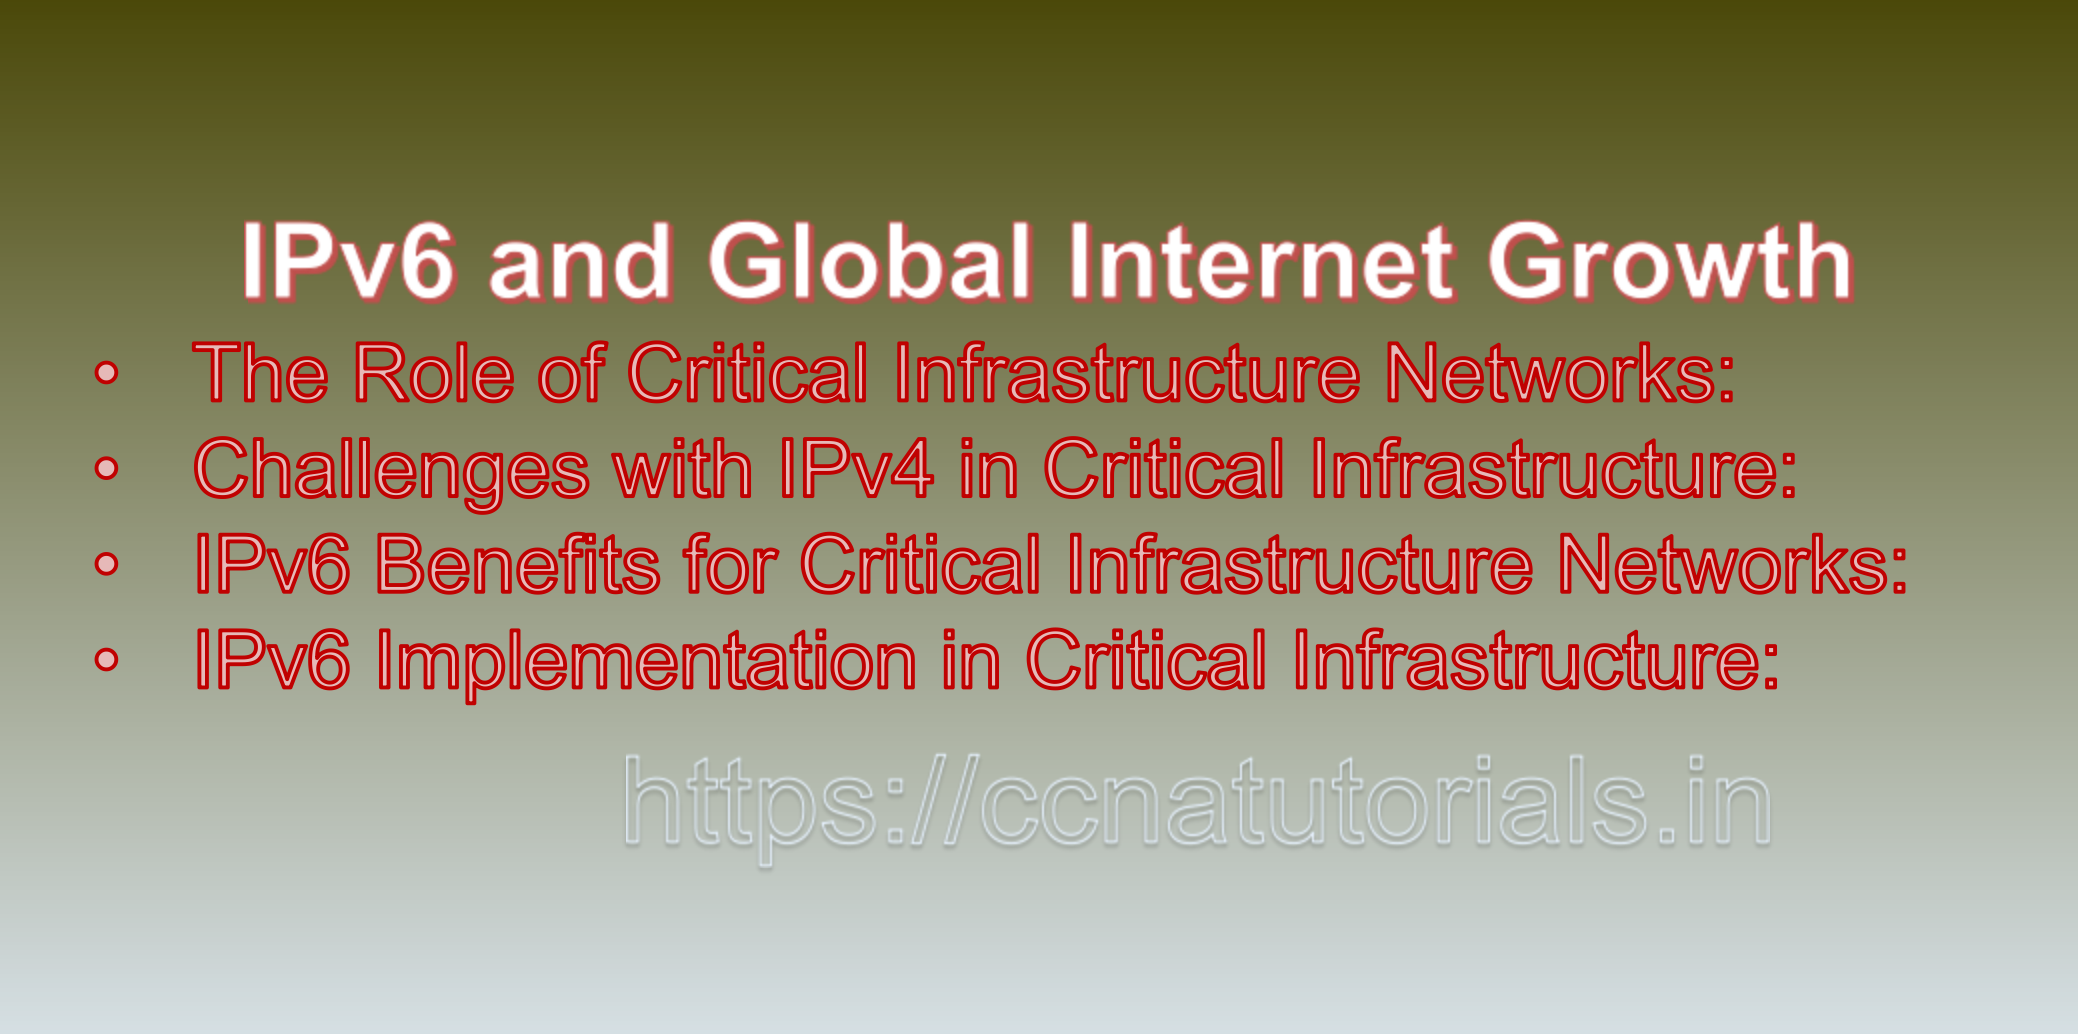 IPv6 in Critical Infrastructure Networks, ccna, ccna tutorials